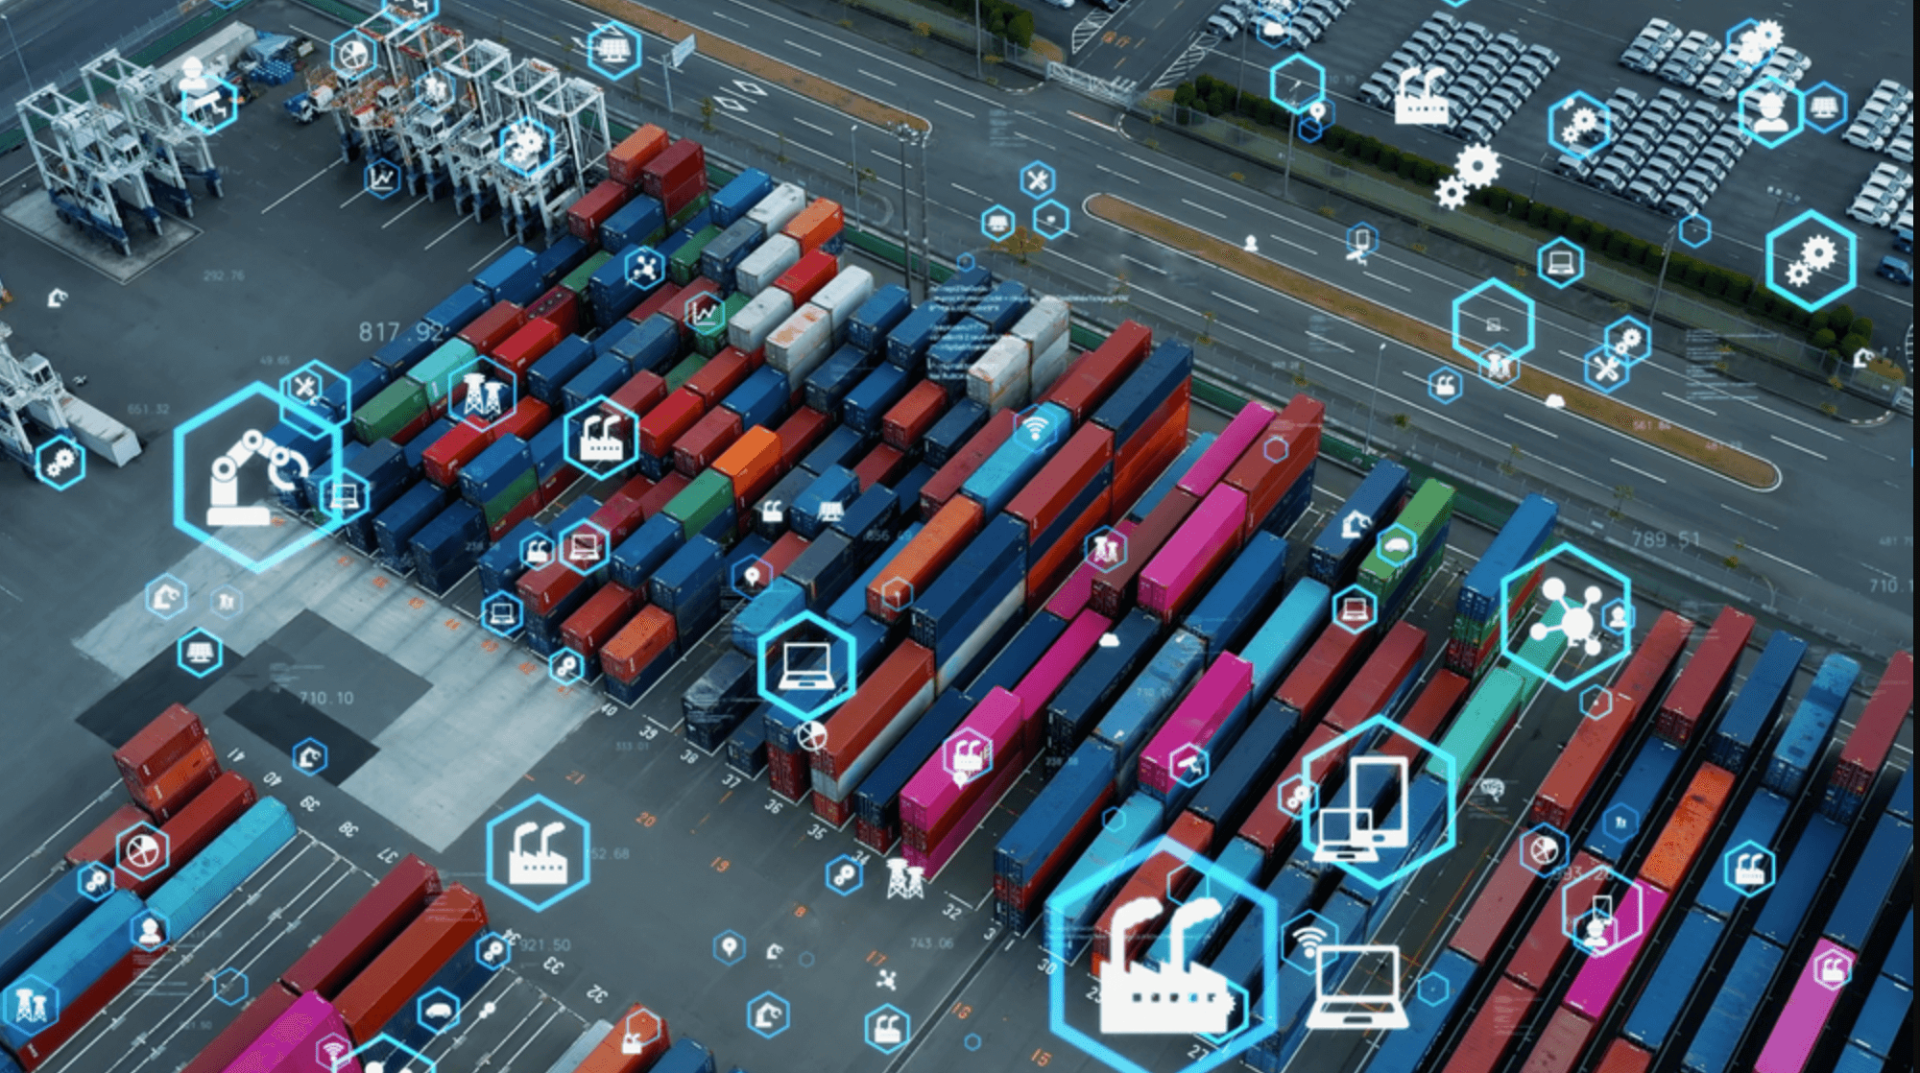 Supply Chain Management Using IoT